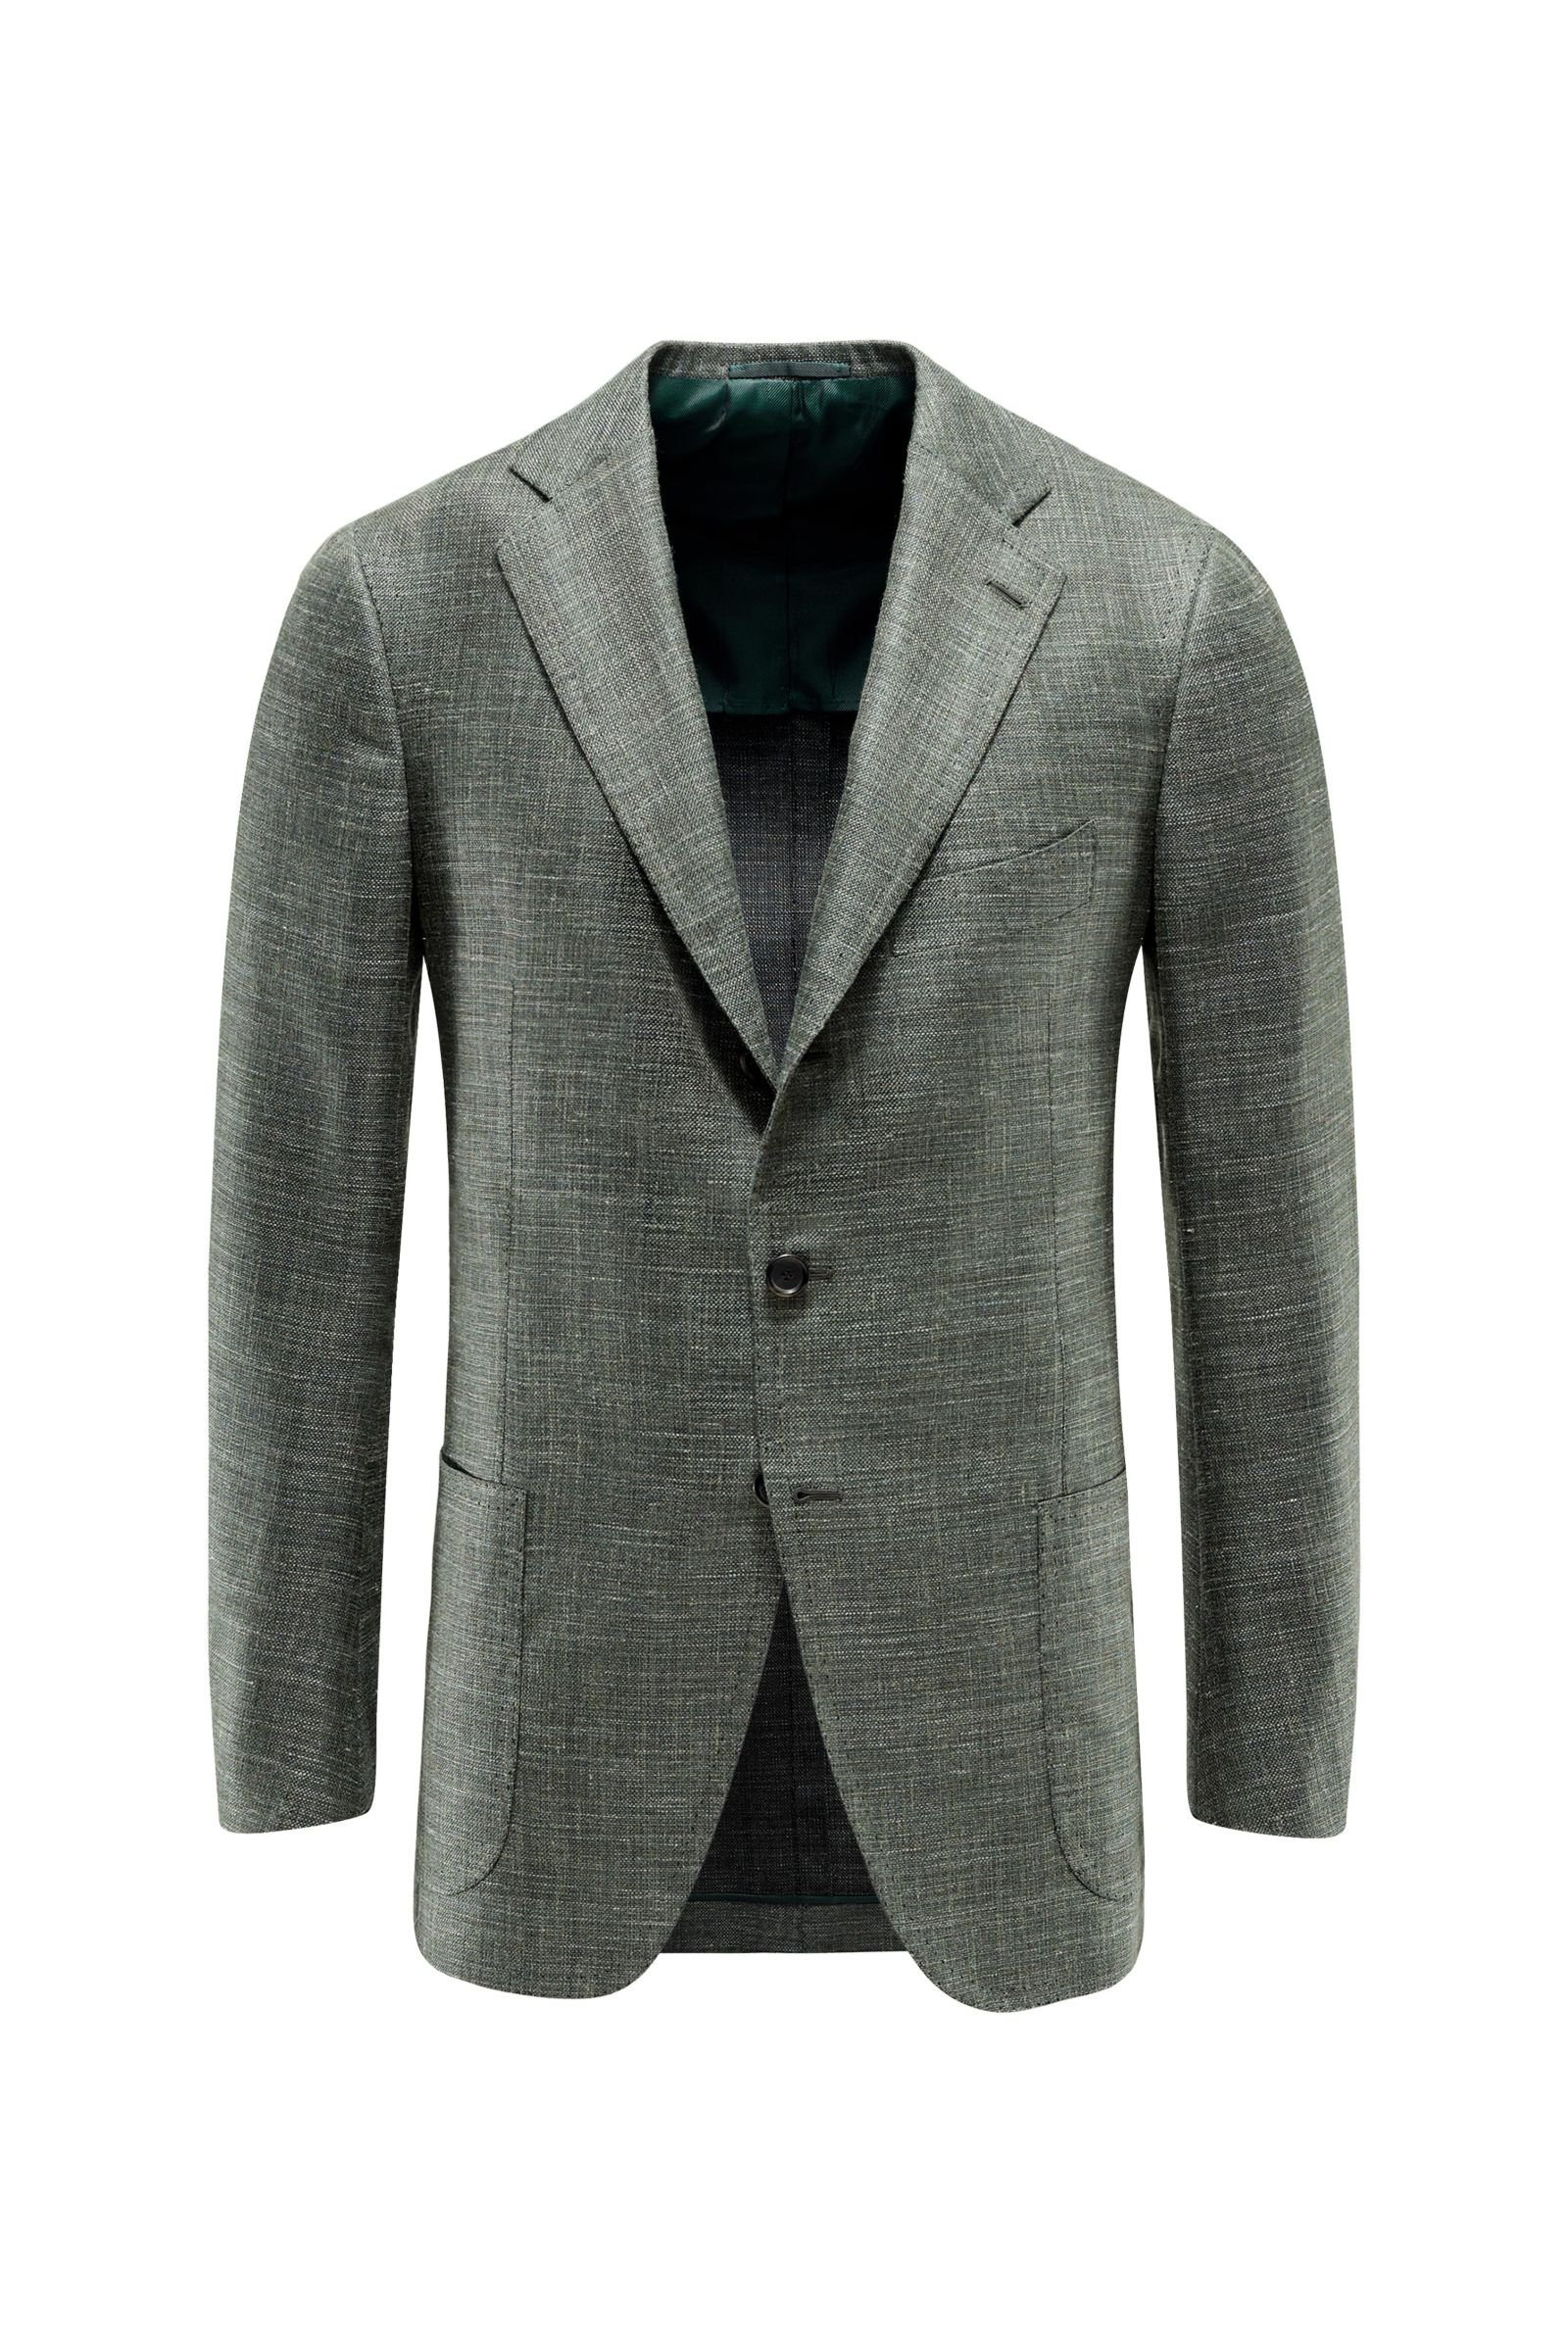 Smart-casual jacket grey-green